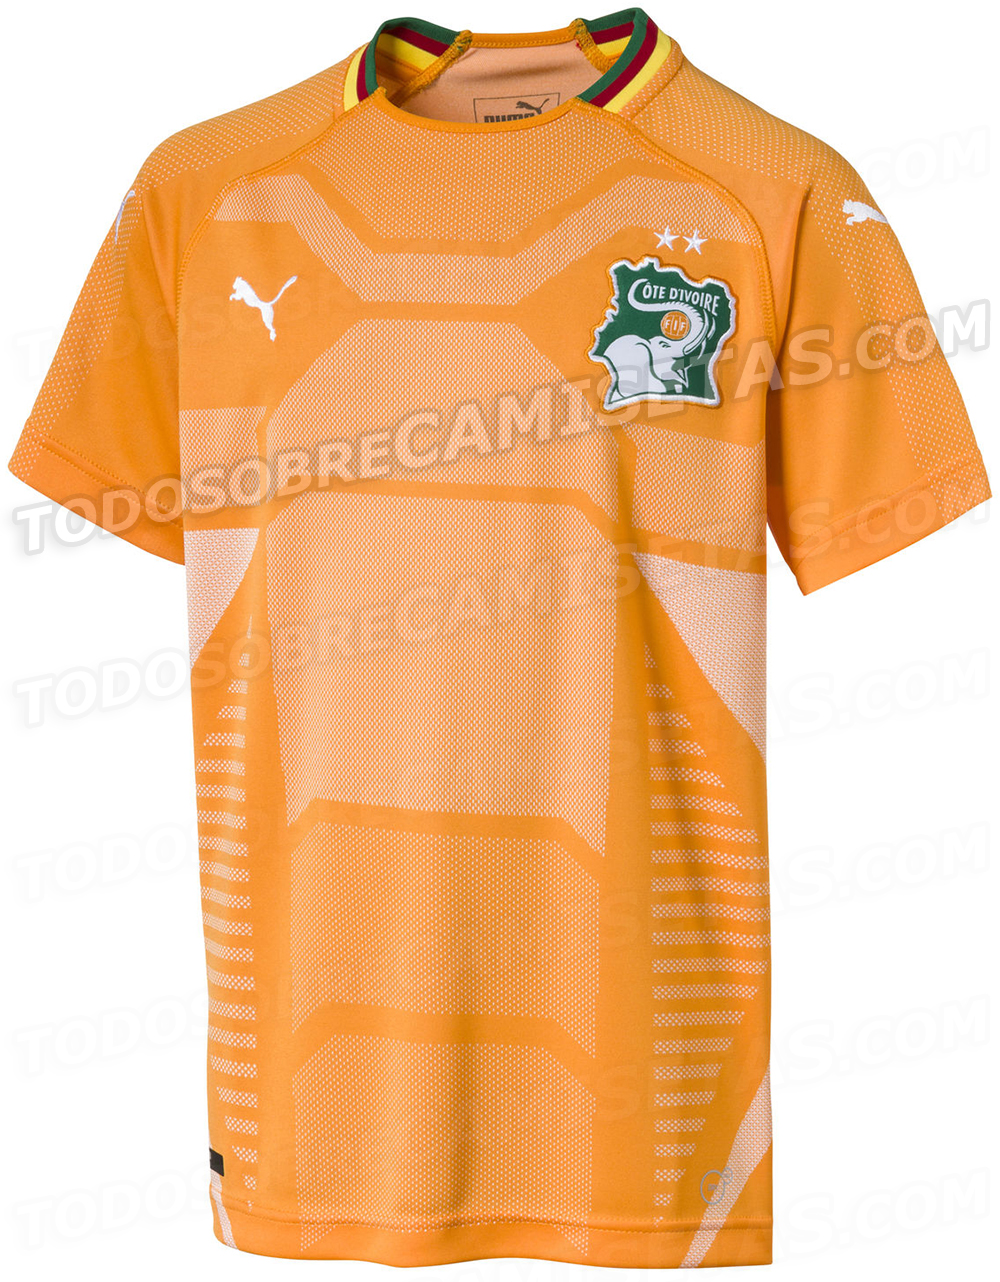 Ivory Coast 2018 World Cup Kit LEAKED